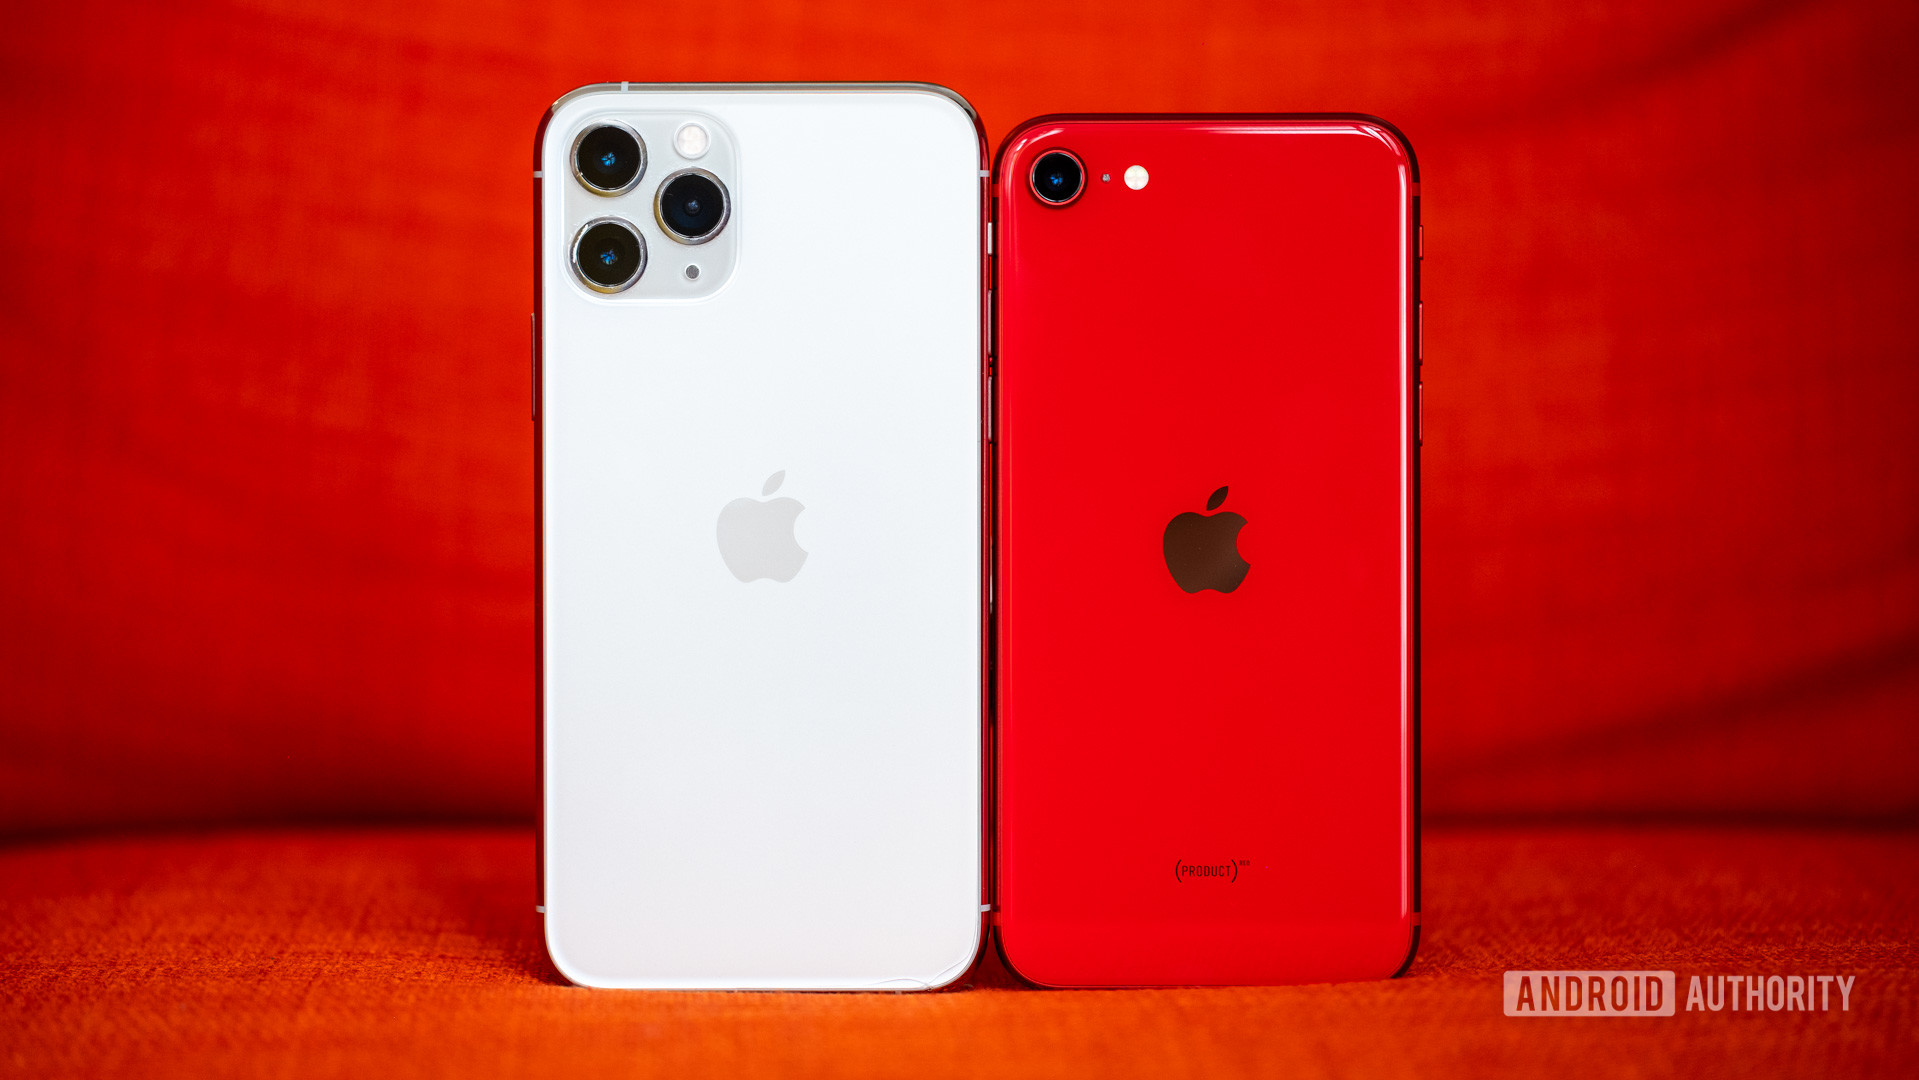 iPhone SE vs iPhone 11 Pro back